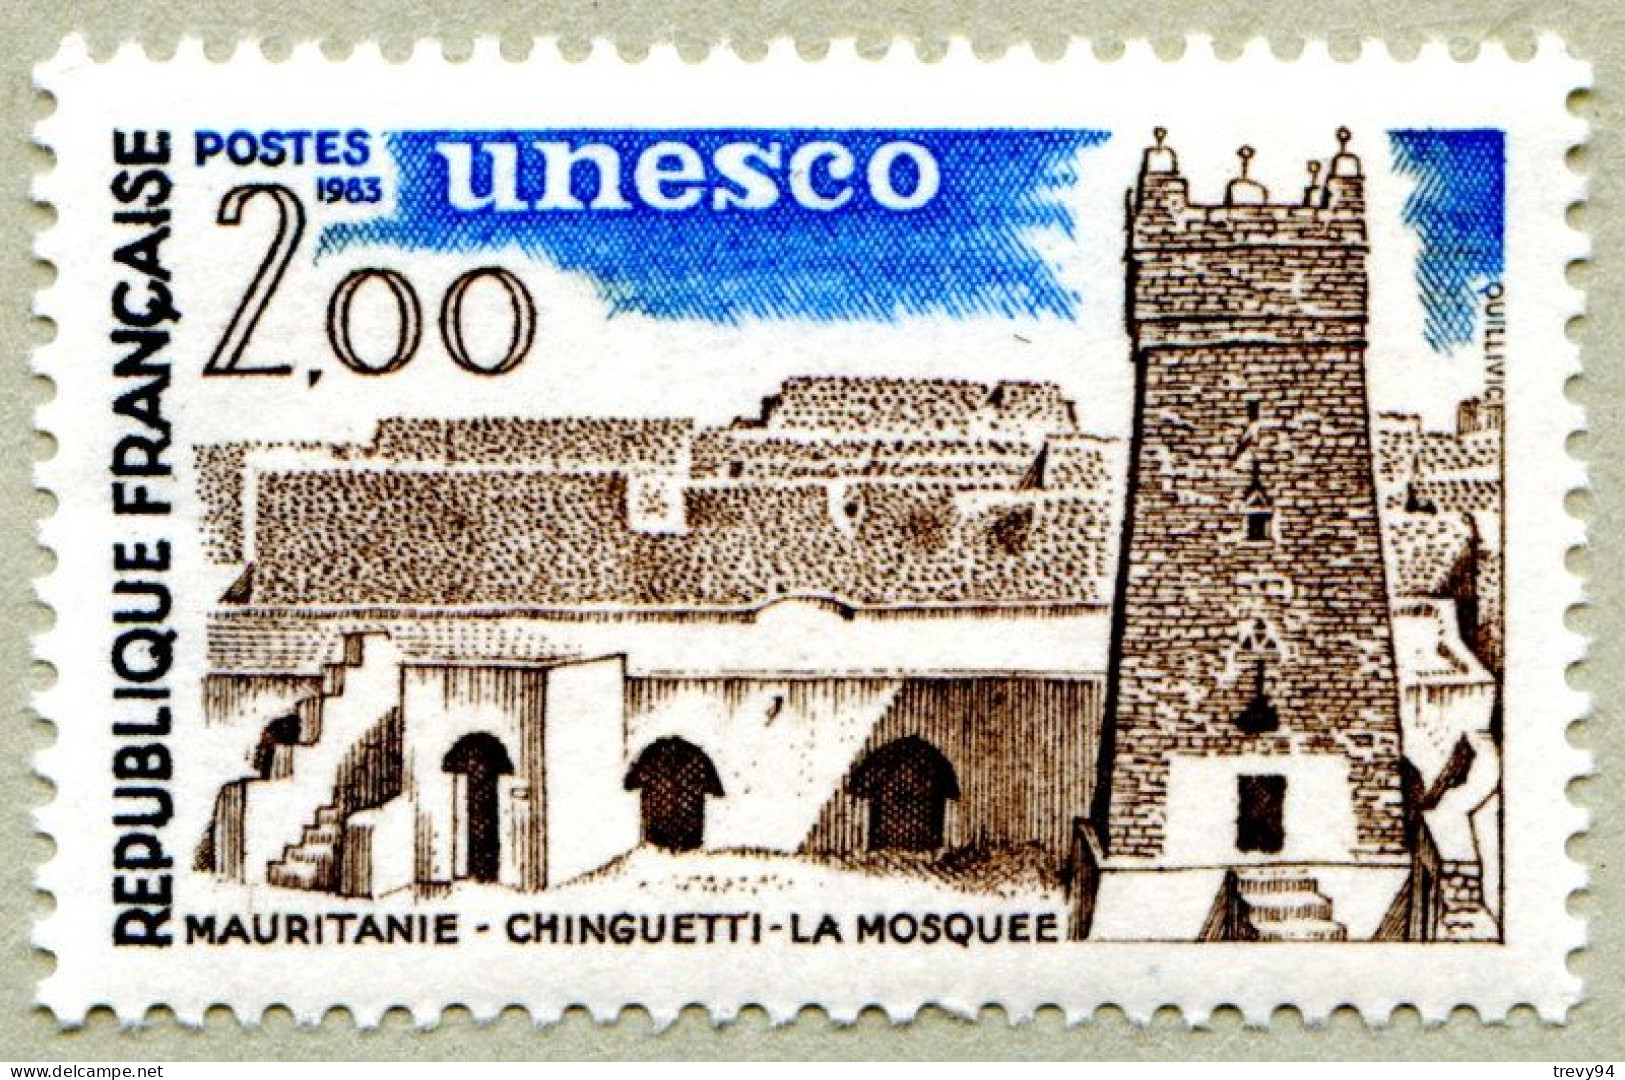 Timbre De Service 1983 - UNESCO Mauritanie Chinguetti - La Mosquée - N° 75 Neuf - Ongebruikt